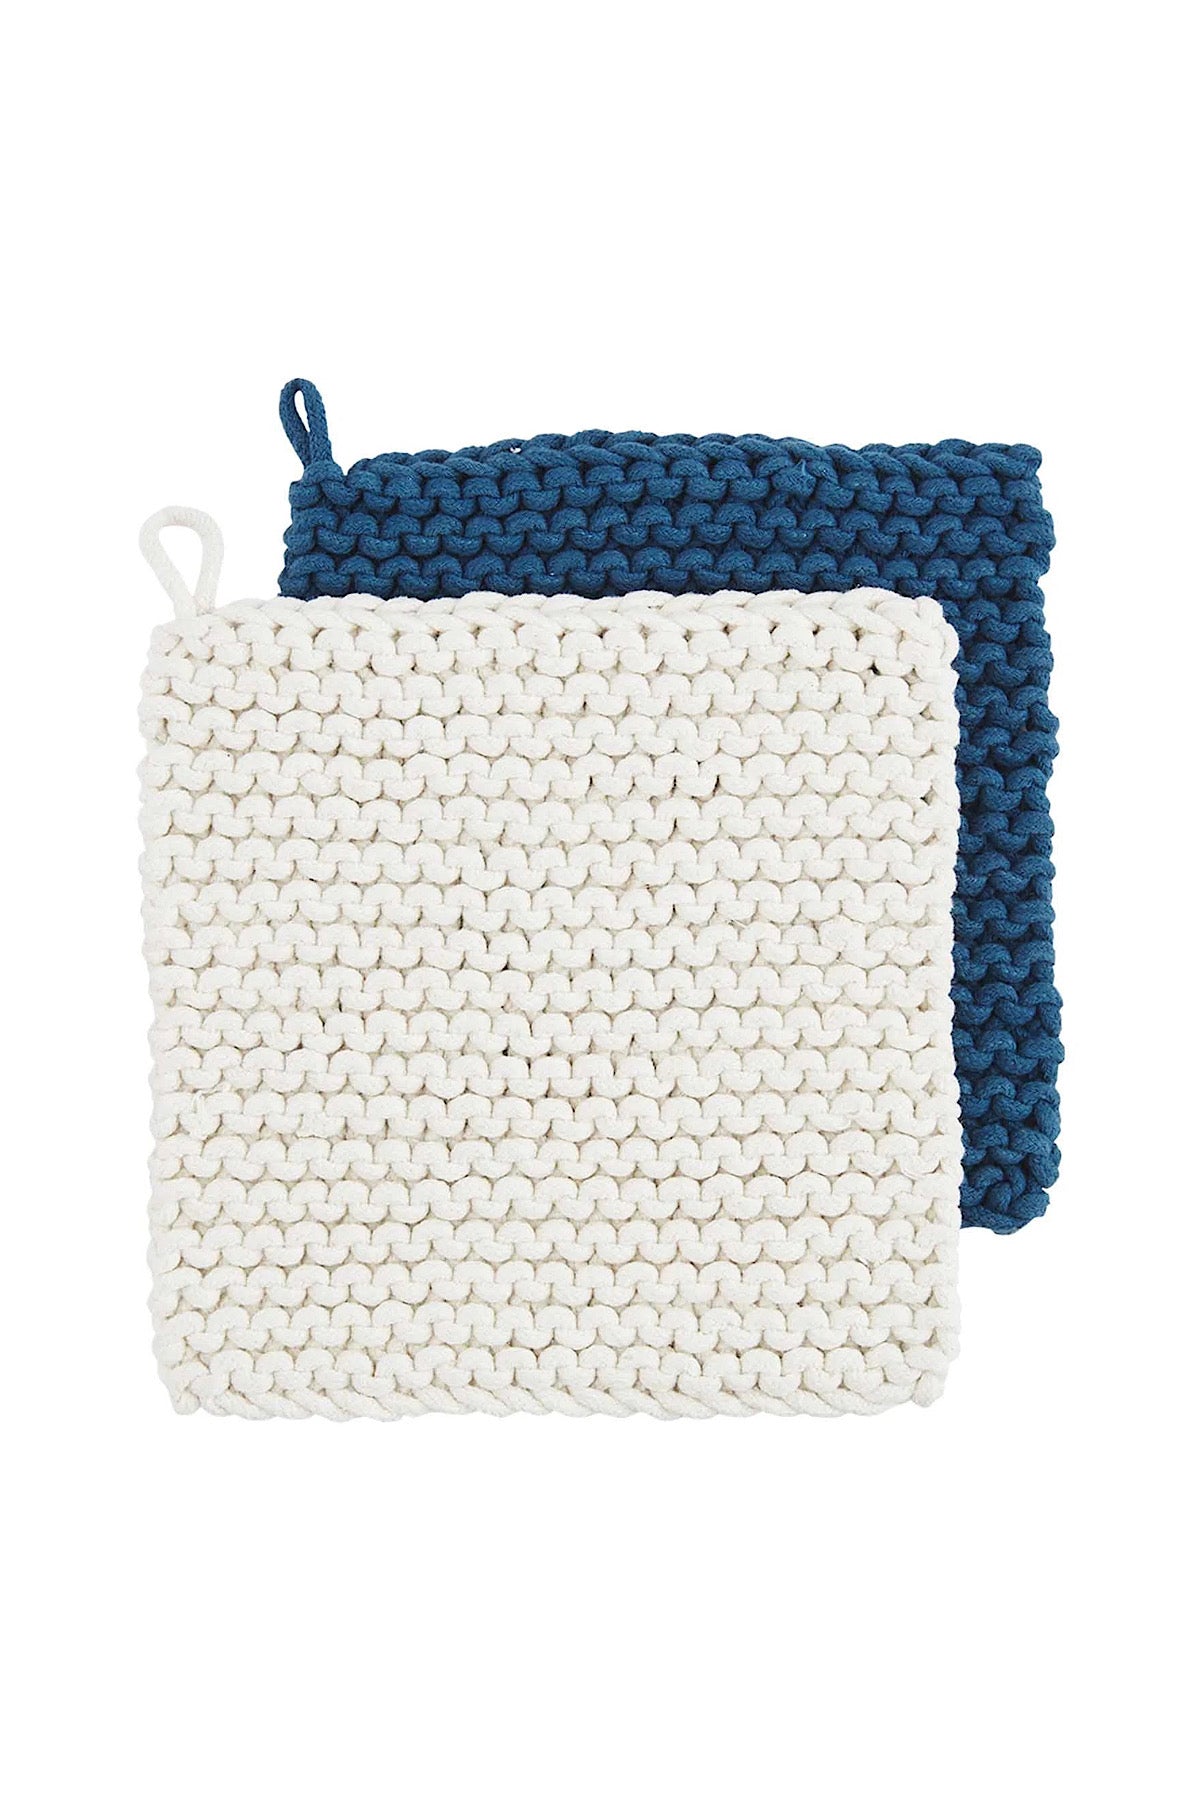 Blue Crochet Pot Holder